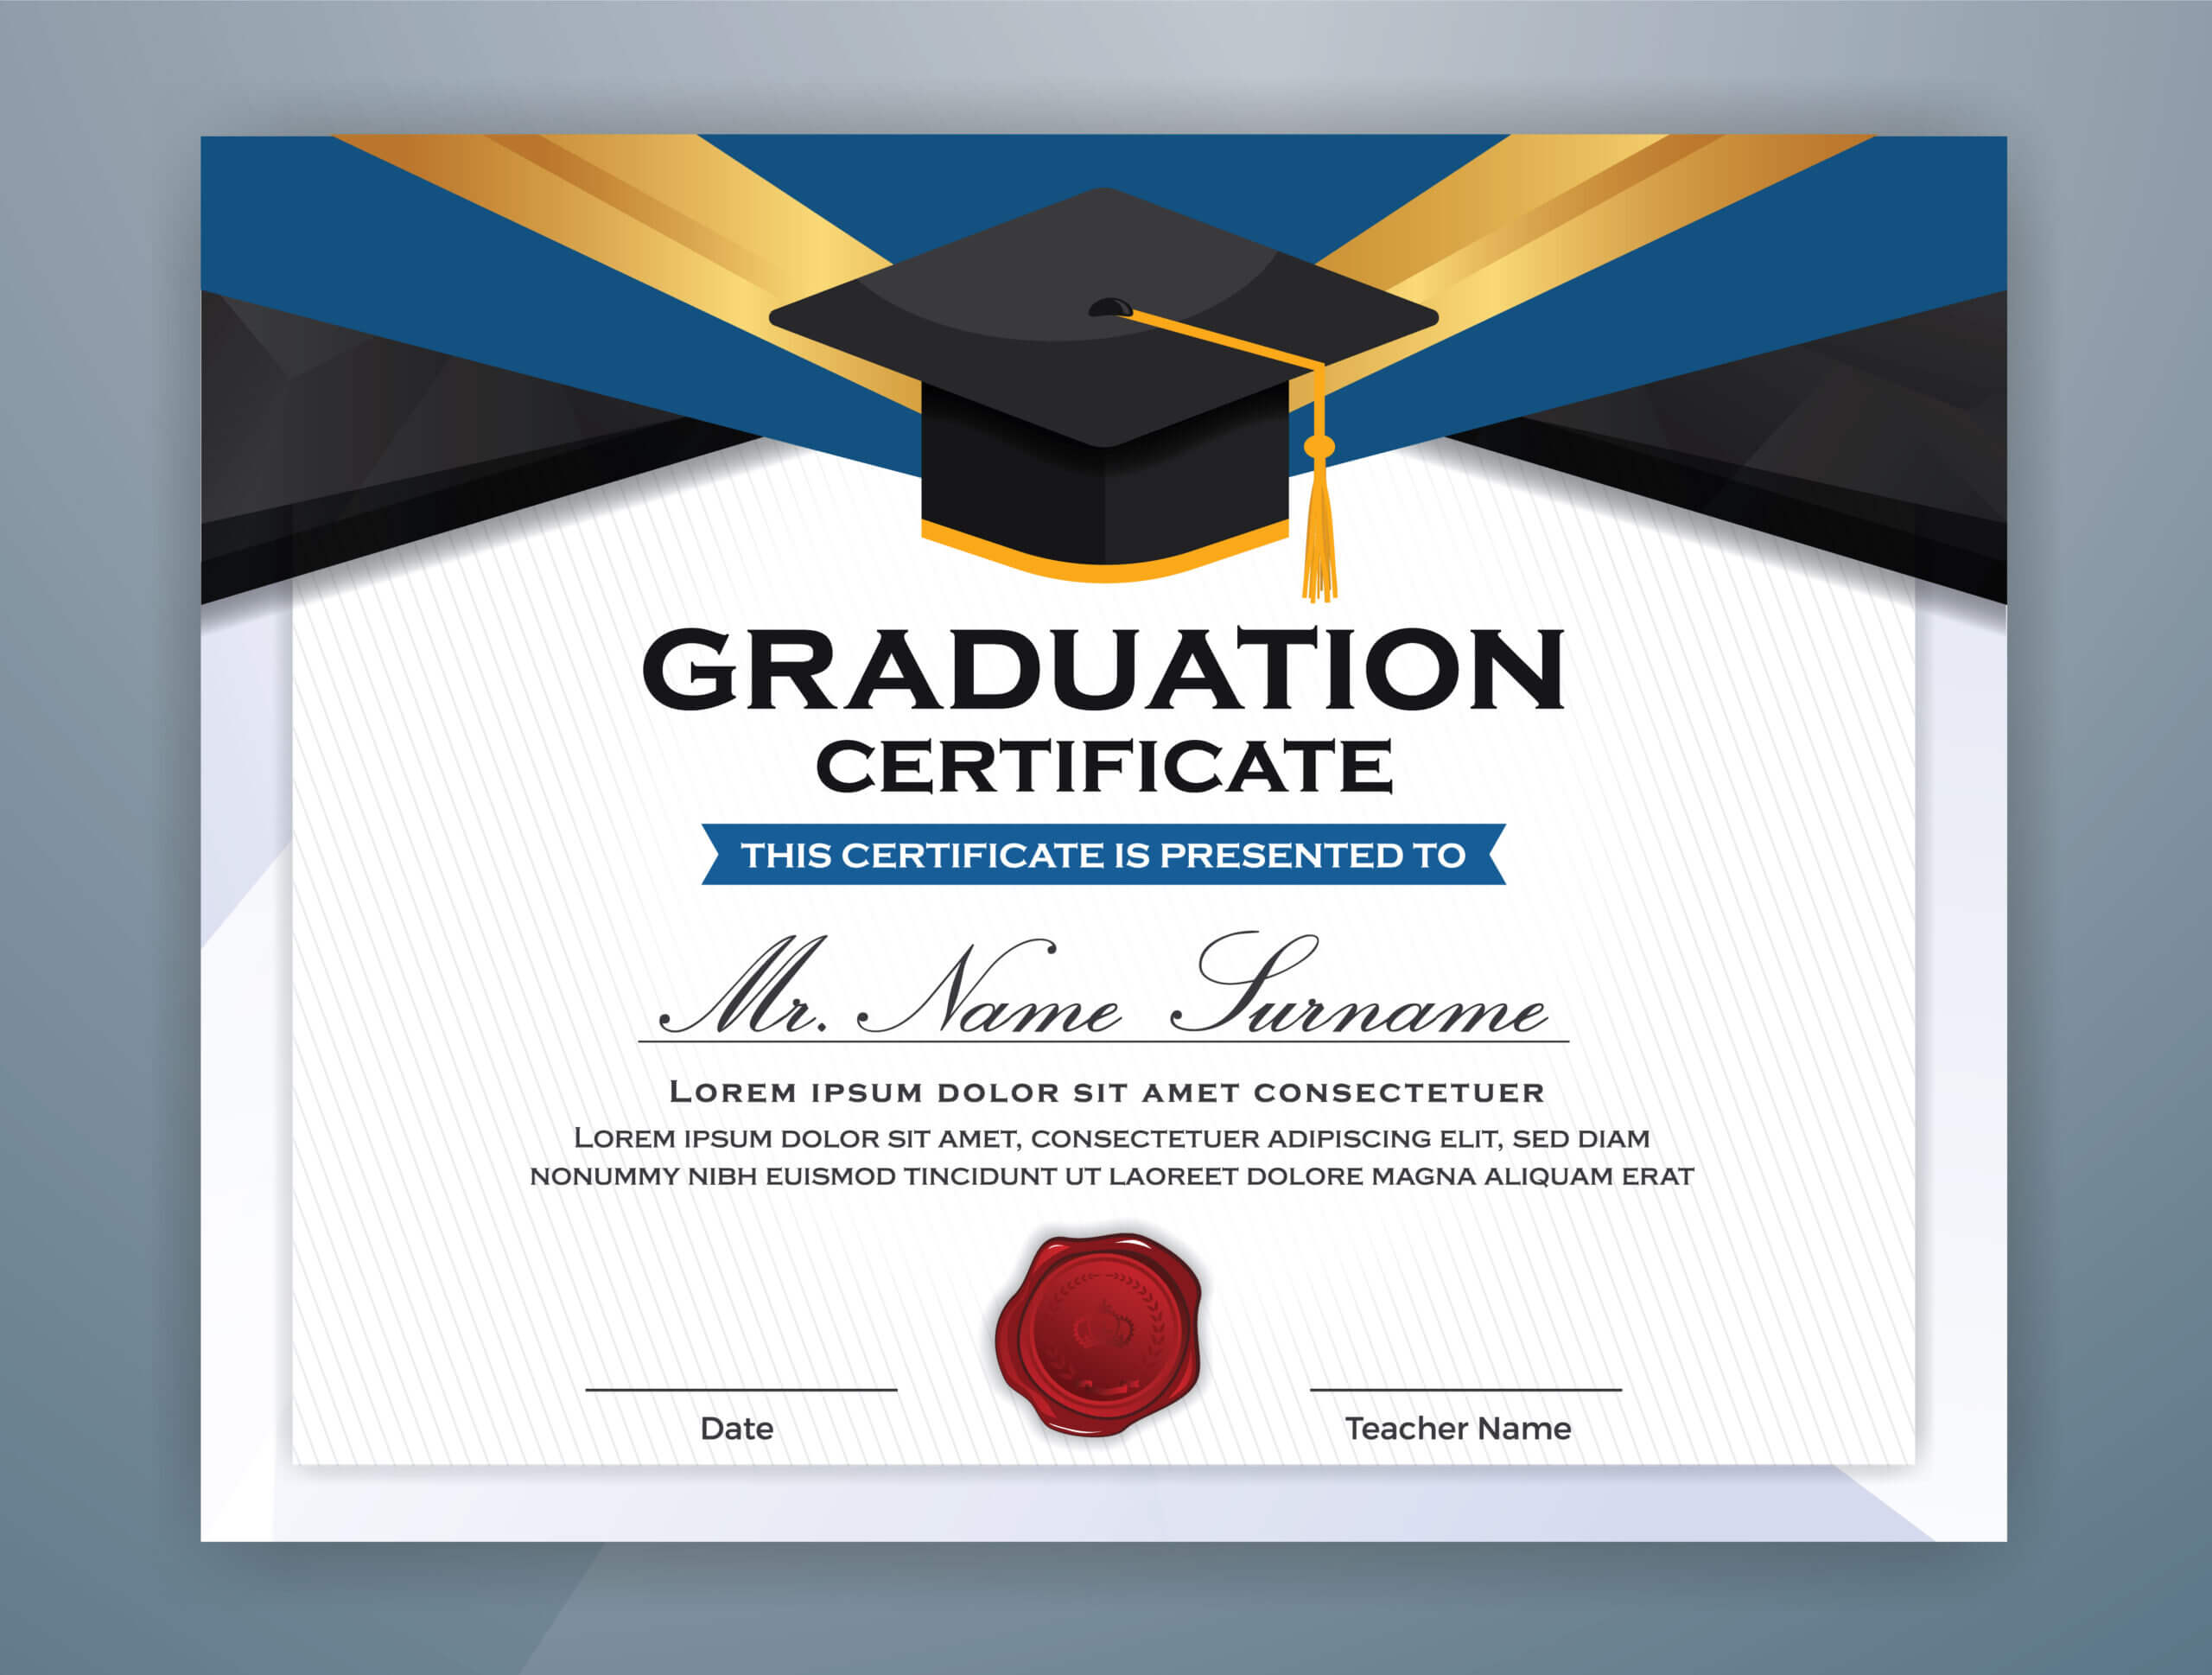 Graduation Certificate Free Vector Art – (4,527 Free Downloads) Within College Graduation Certificate Template